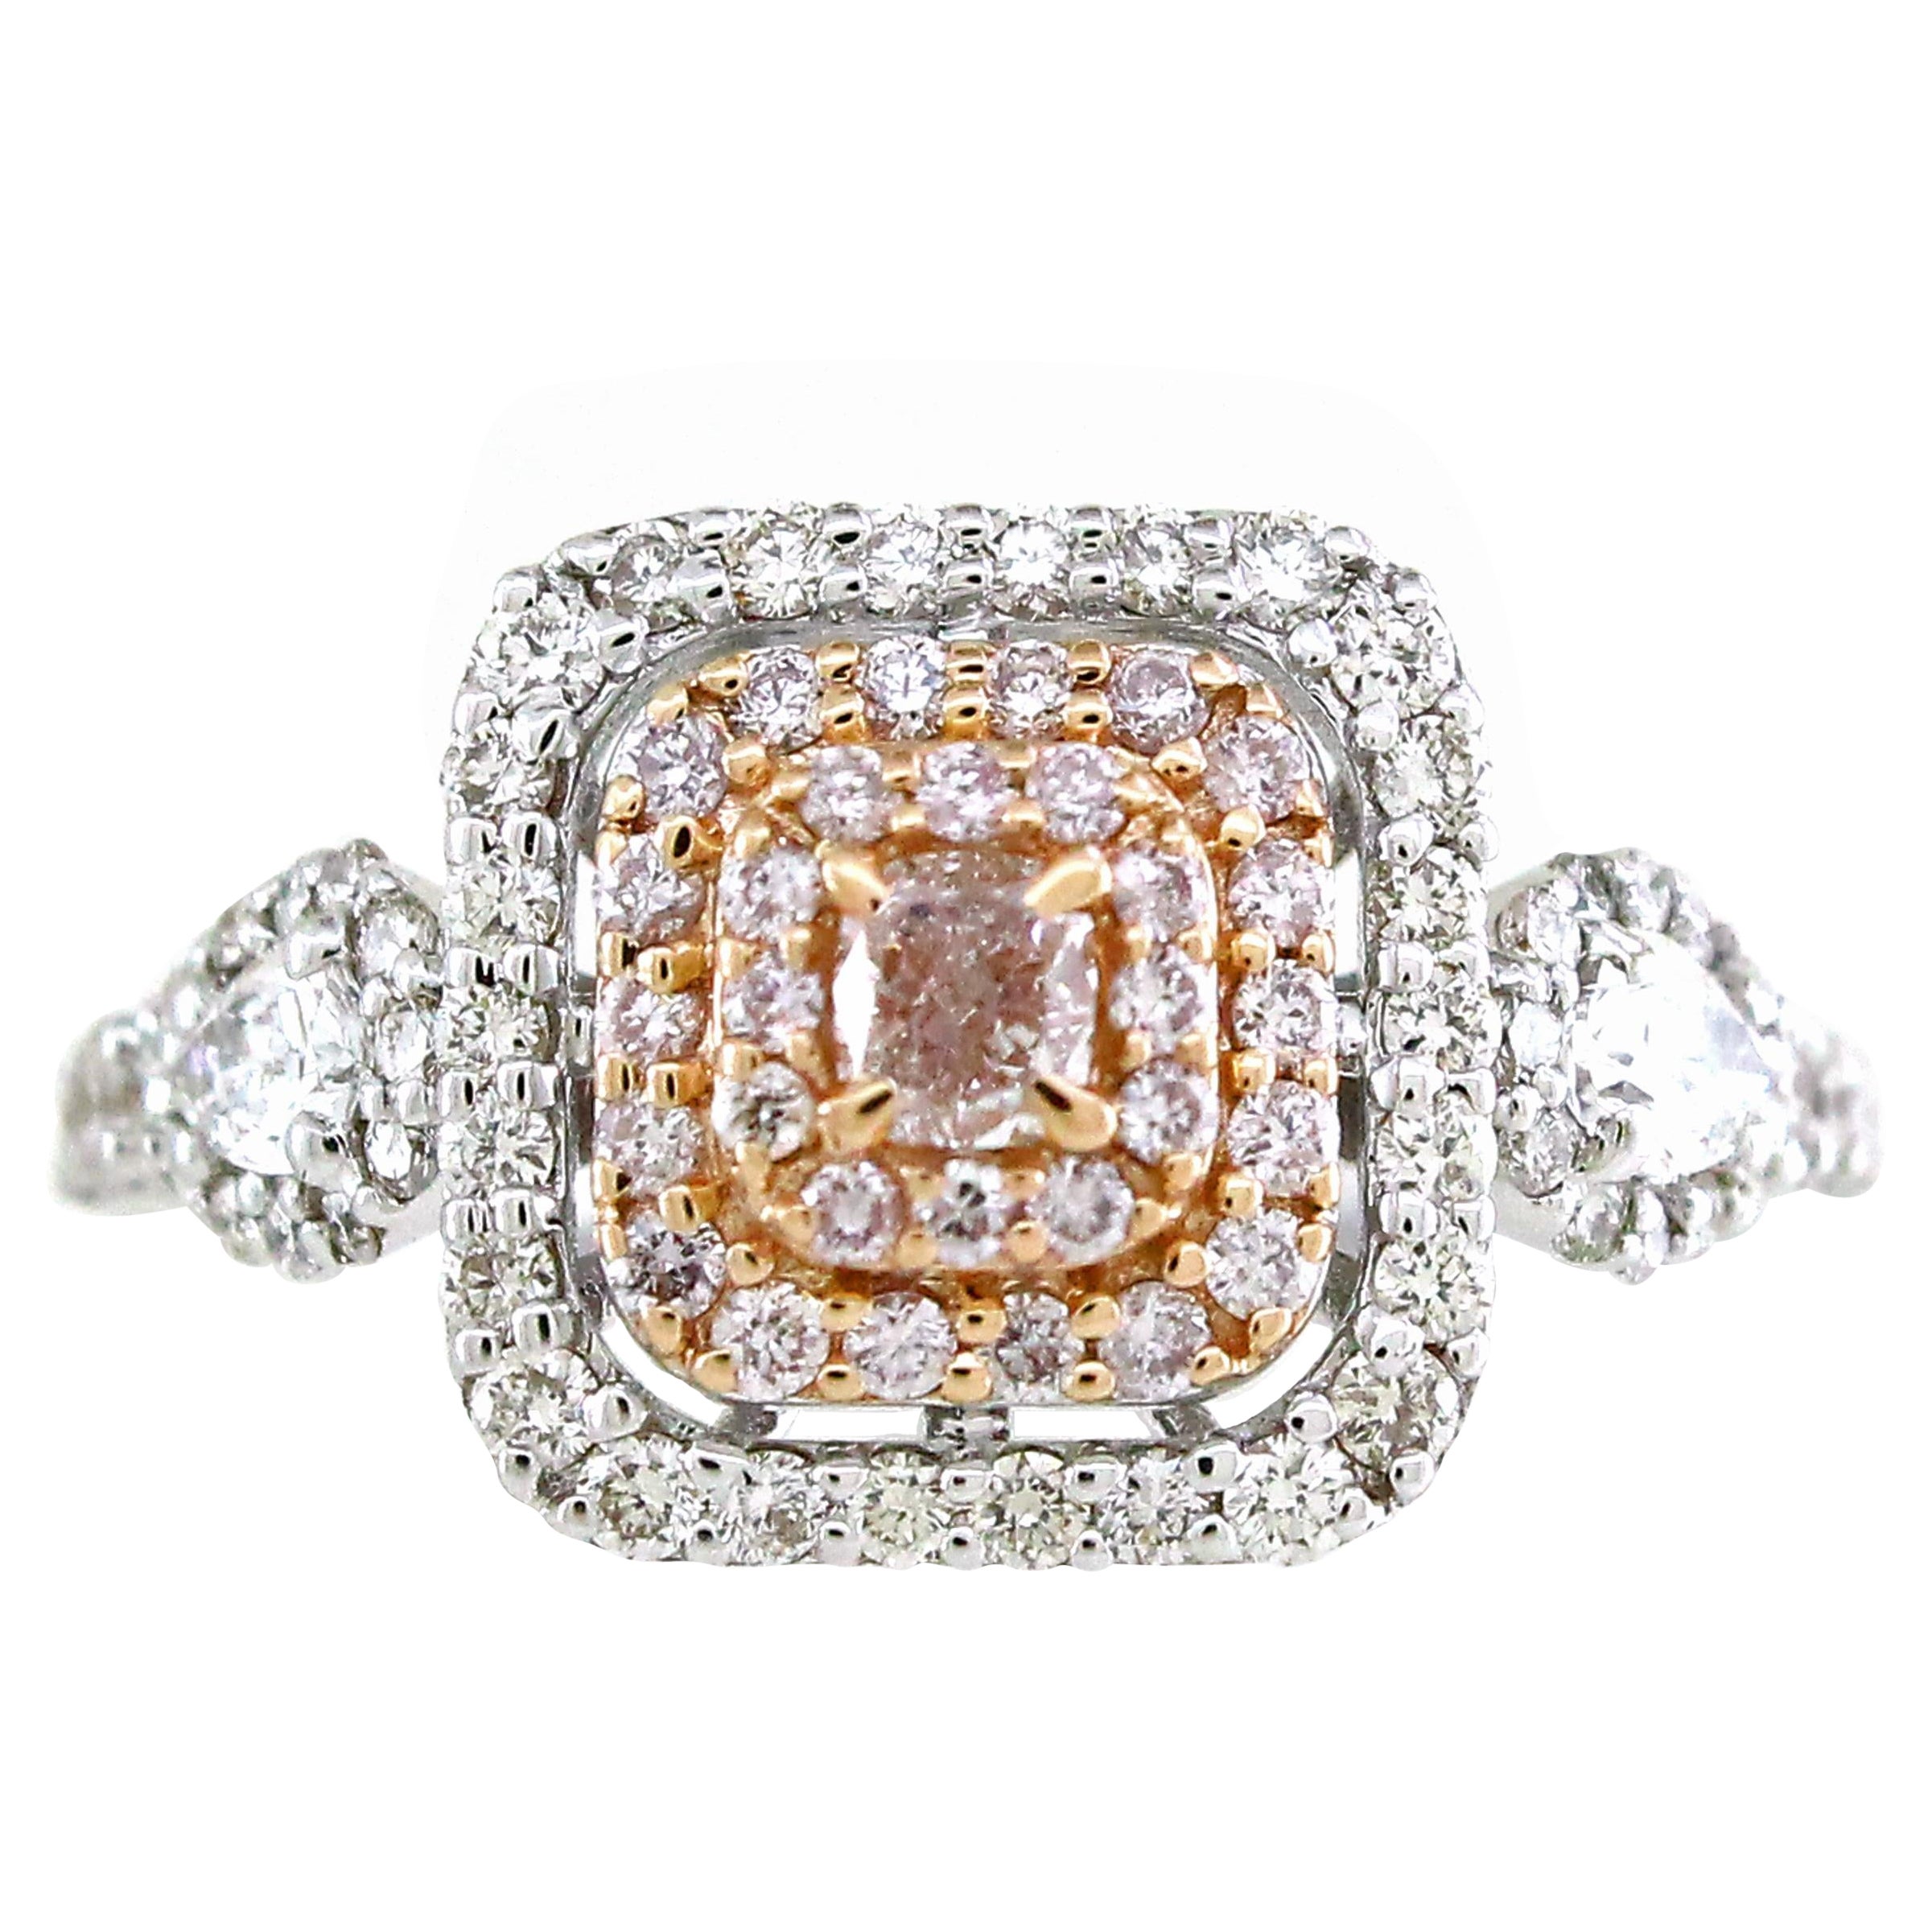 Fancy Pink Diamond Ring